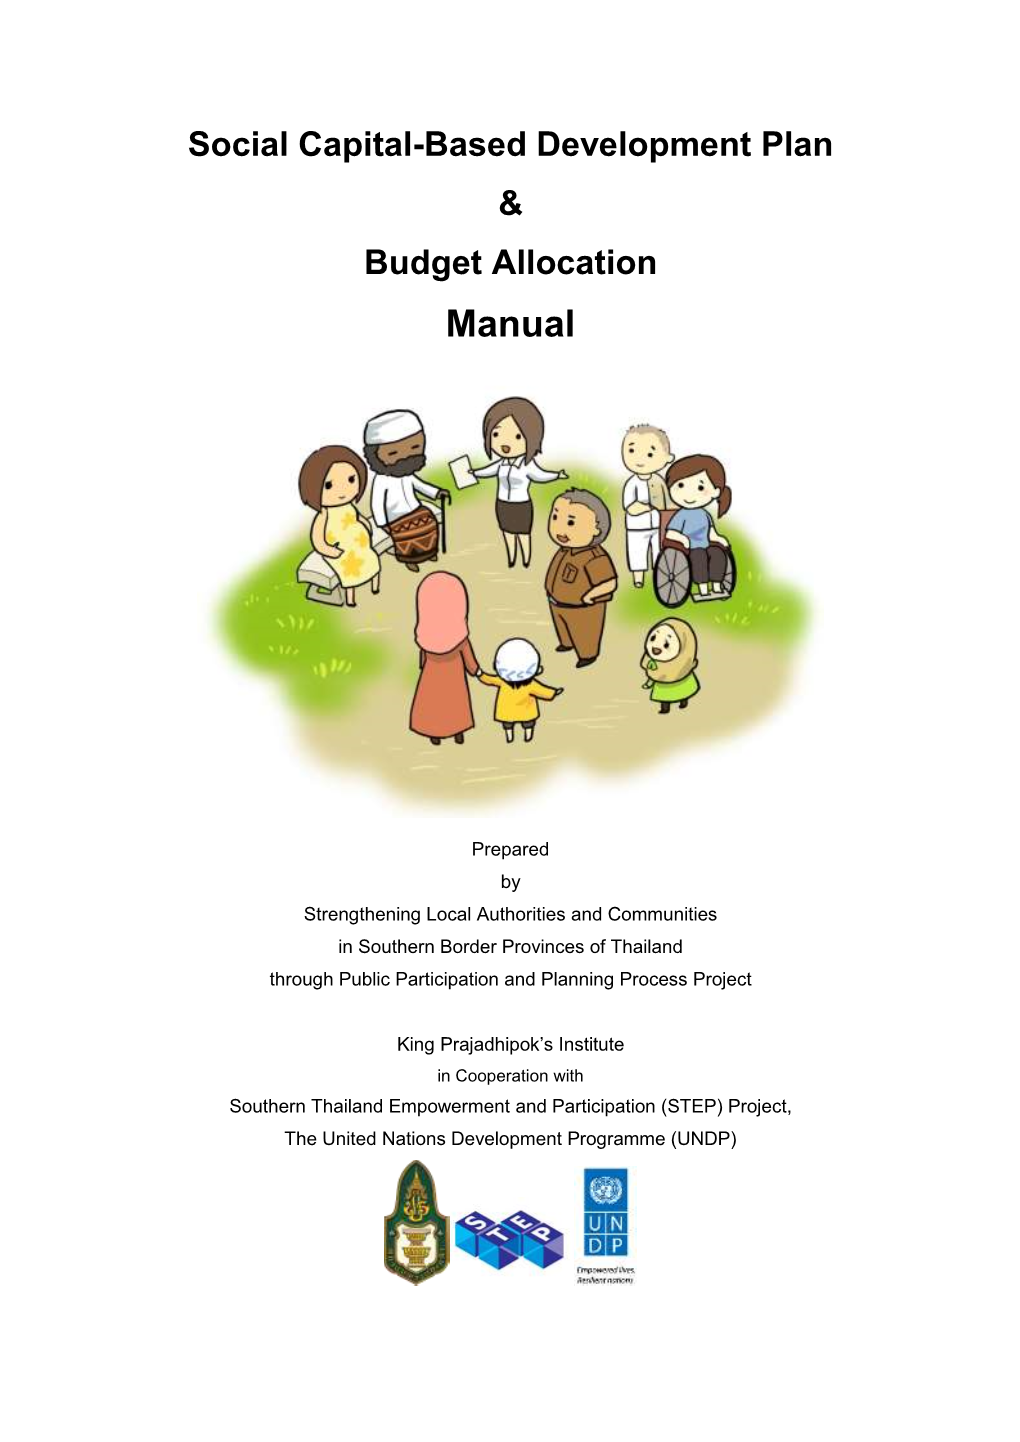 Social Capital-Based Development Plan & Budget Allocation Manual